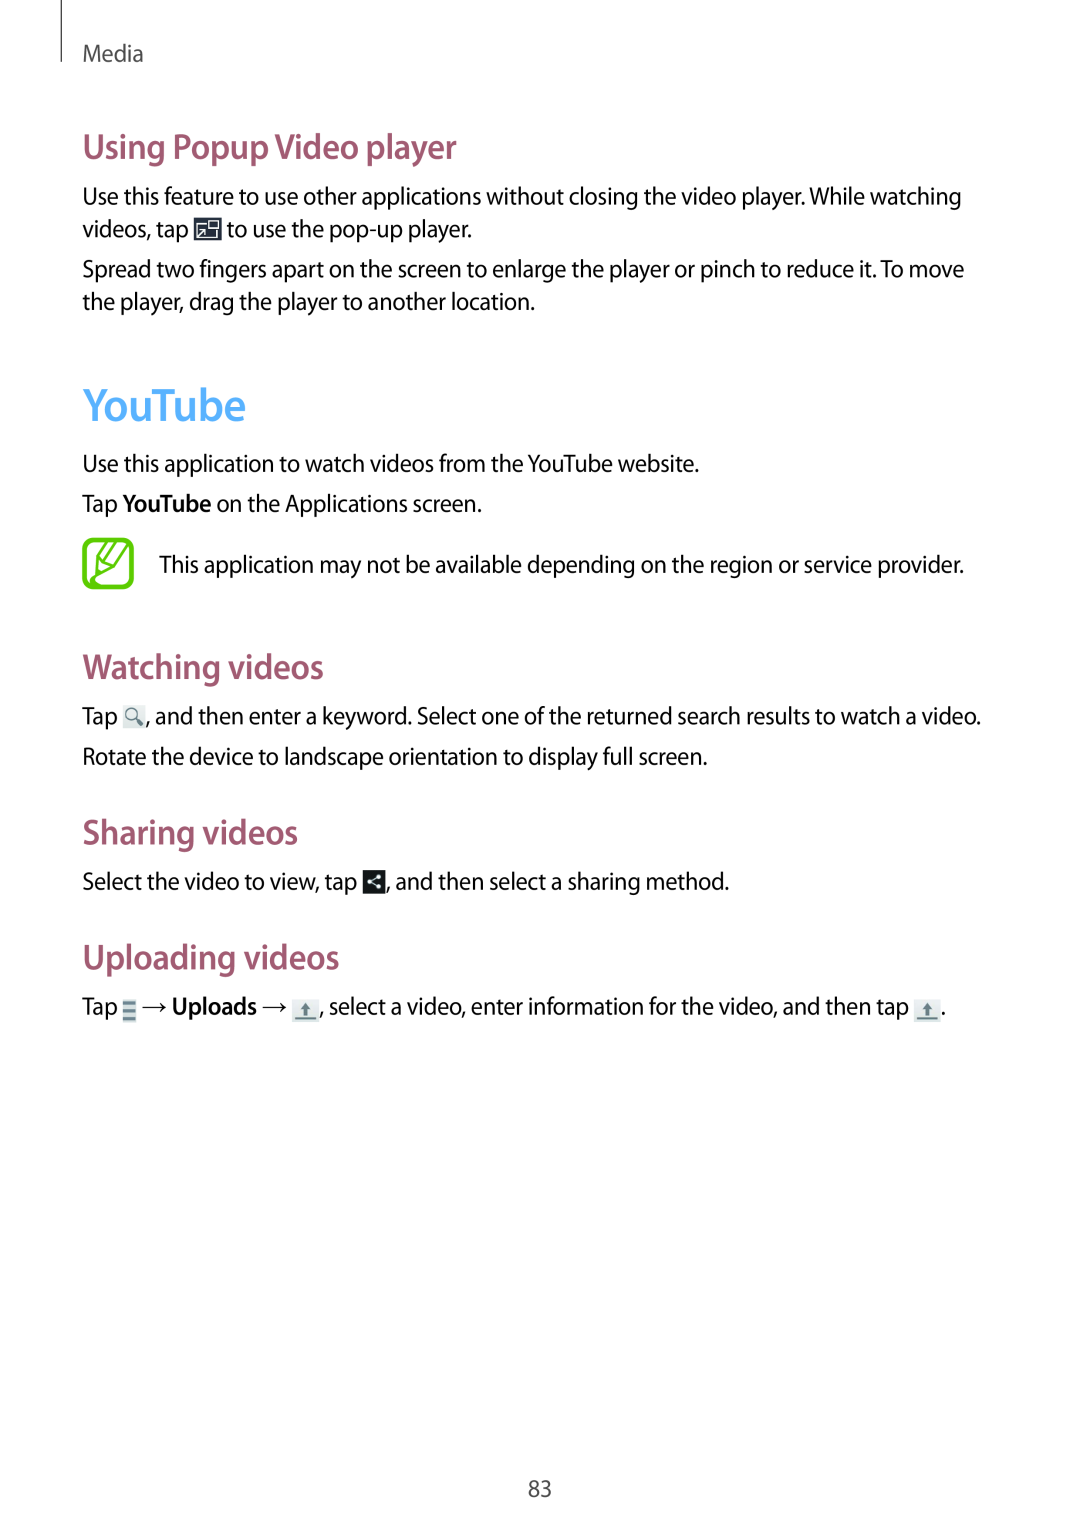 Samsung GT-I9305ZNDVD2 manual YouTube, Using Popup Video player, Watching videos, Uploading videos, Sharing videos, Media 